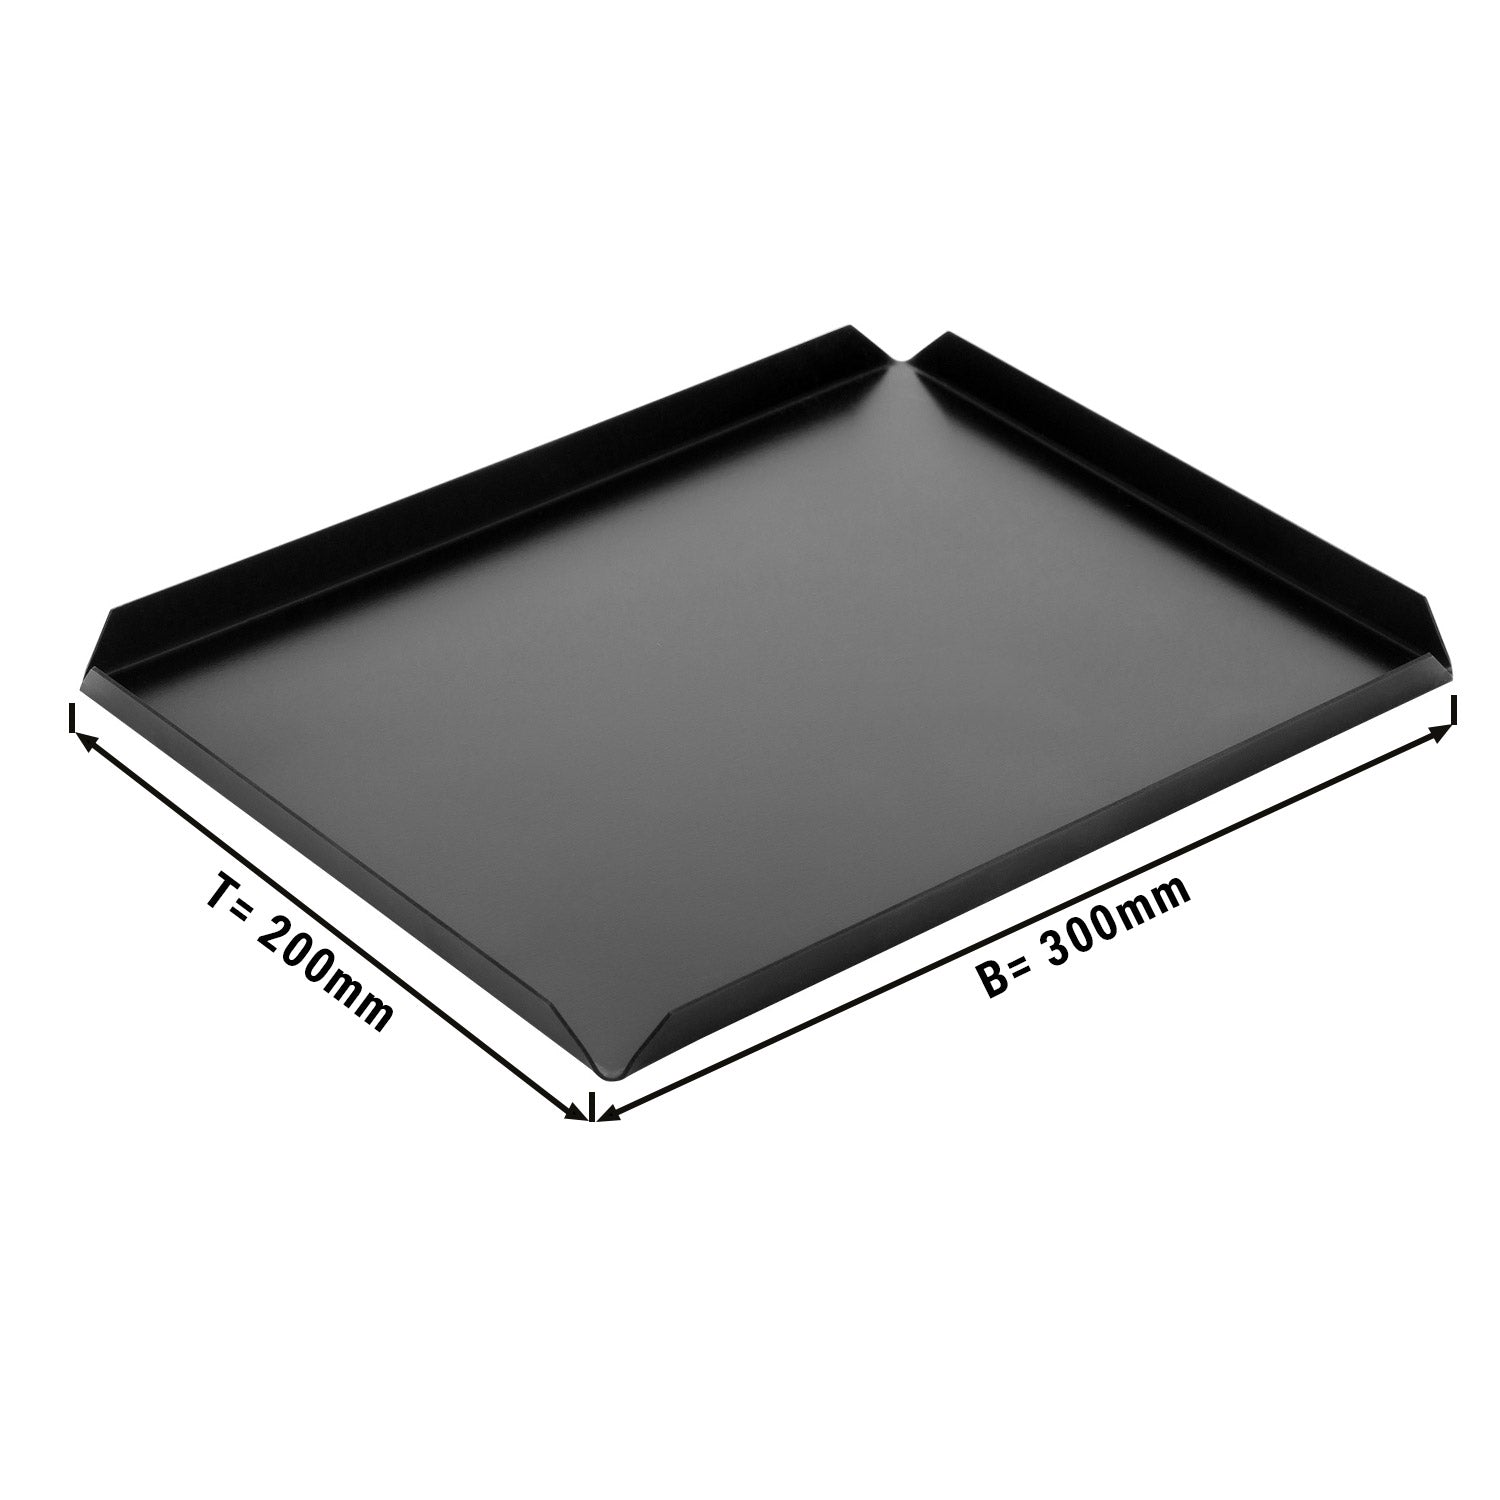 (5 stk.) Slik- og præsentationsplade i aluminium - 300 x 200 x 10 mm - Sort